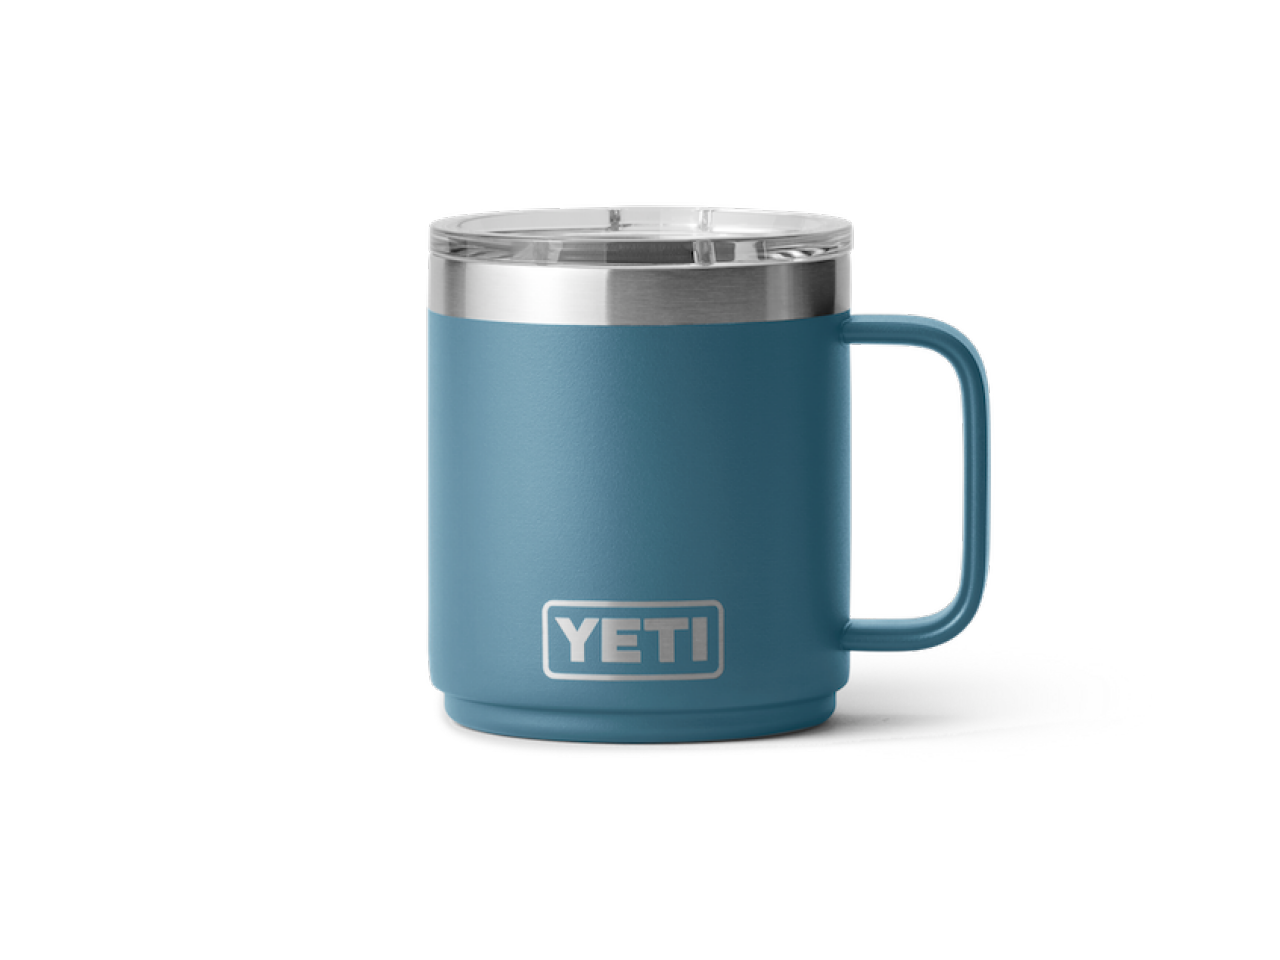 YETI TEA - Bubble Tea & Coffee